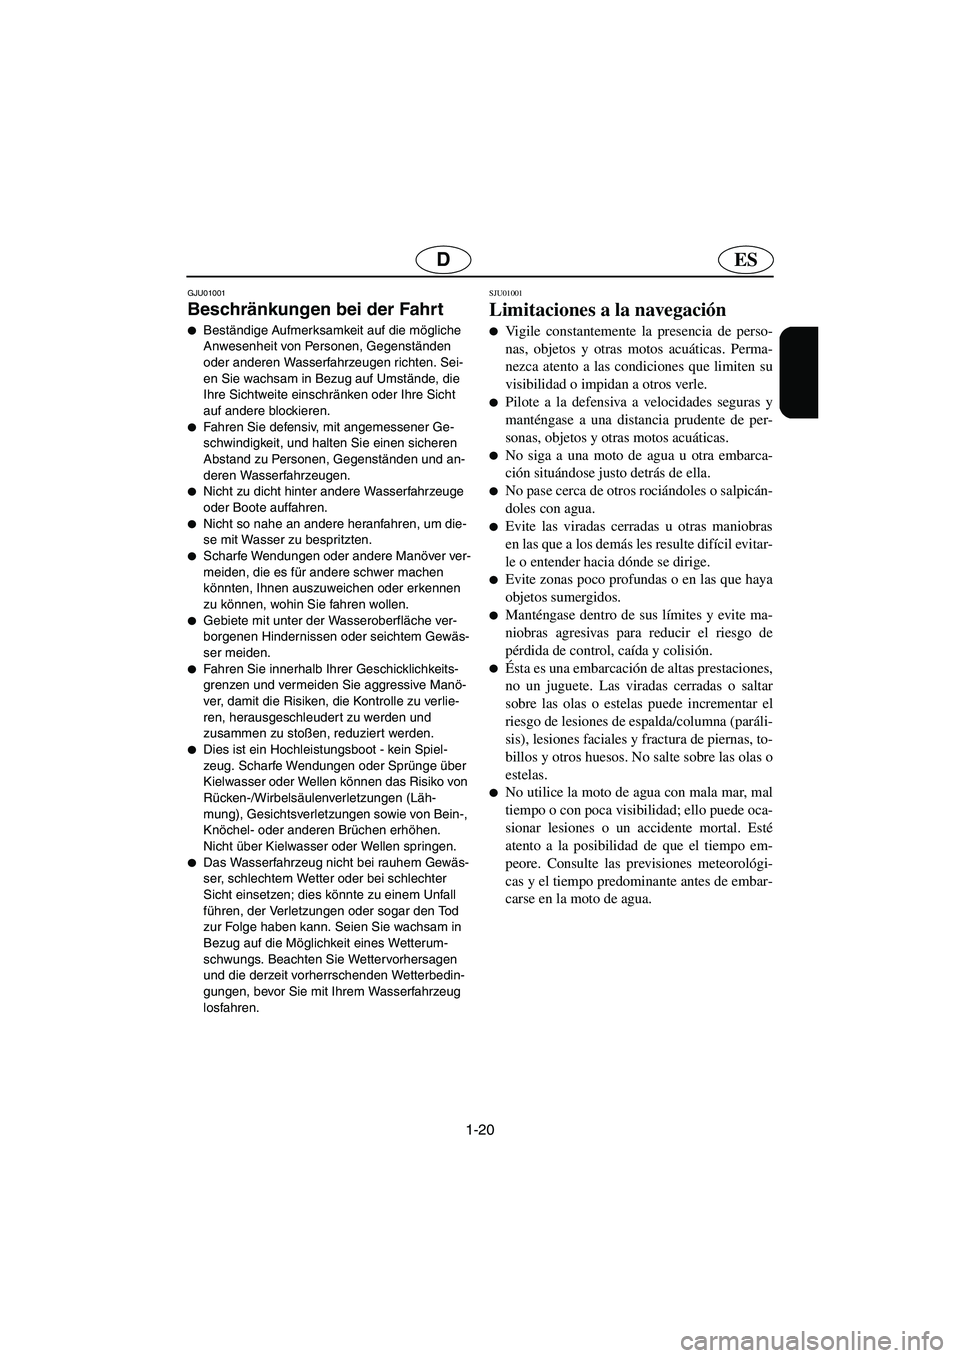 YAMAHA FX 2003  Manuale de Empleo (in Spanish) 1-20
ESD
GJU01001 
Beschränkungen bei der Fahrt  
Beständige Aufmerksamkeit auf die mögliche 
Anwesenheit von Personen, Gegenständen 
oder anderen Wasserfahrzeugen richten. Sei-
en Sie wachsam in